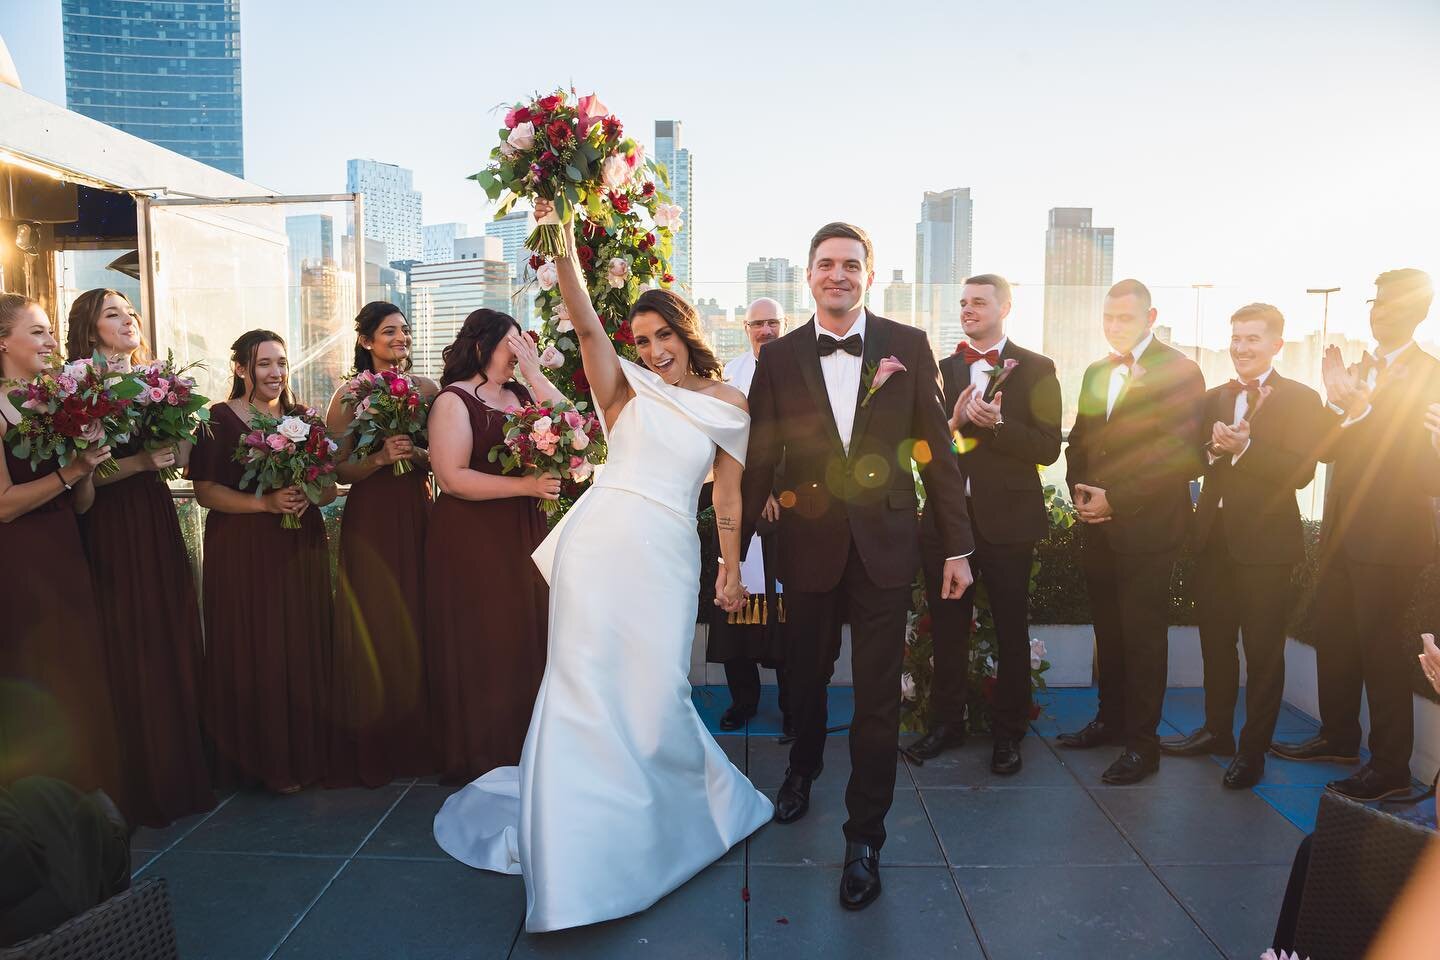 Throwing it back to this beautiful NYC rooftop wedding 💖

📸: @artlook_us 
🎶: @beattrain 
💐: @wemakefun 
📋: @elardoevents 
💄: @glamdelivery 
💒: @vistaskylounge